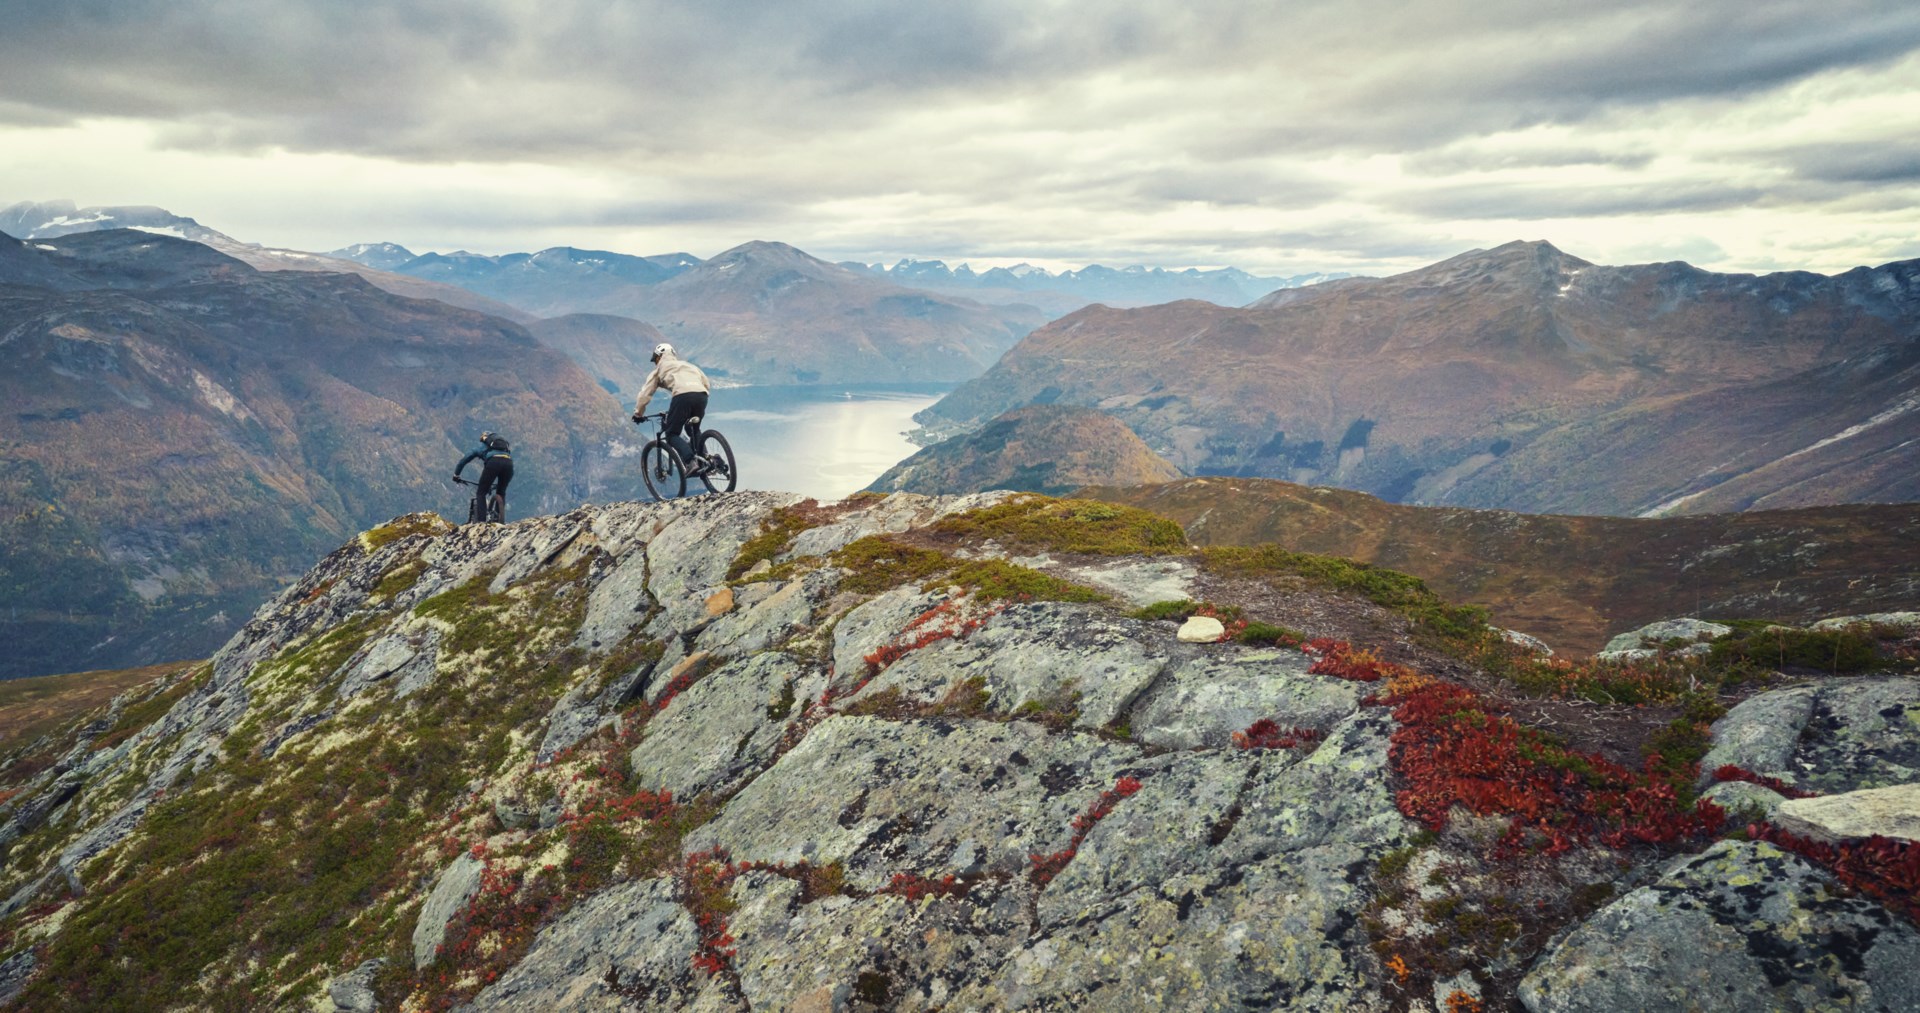 2 people mountain biking on top of a rocky mountain